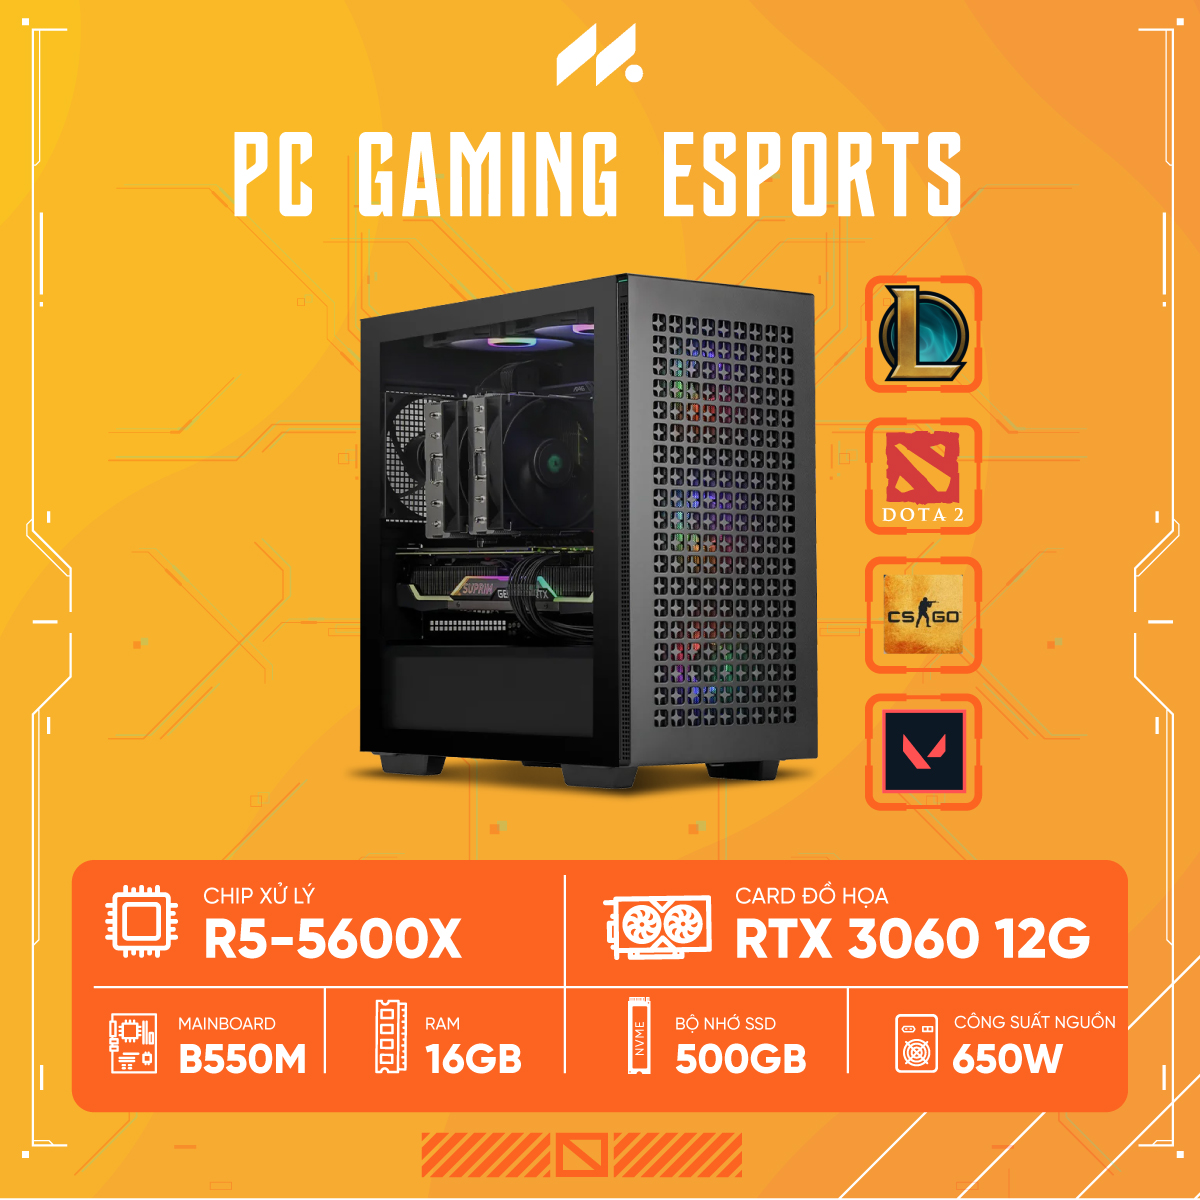 PC Gaming Esports R5X 3060 (Ryzen 5 5600X, RTX 3060 12G, Ram 16GB, SSD 500GB, 650W,Win 11)